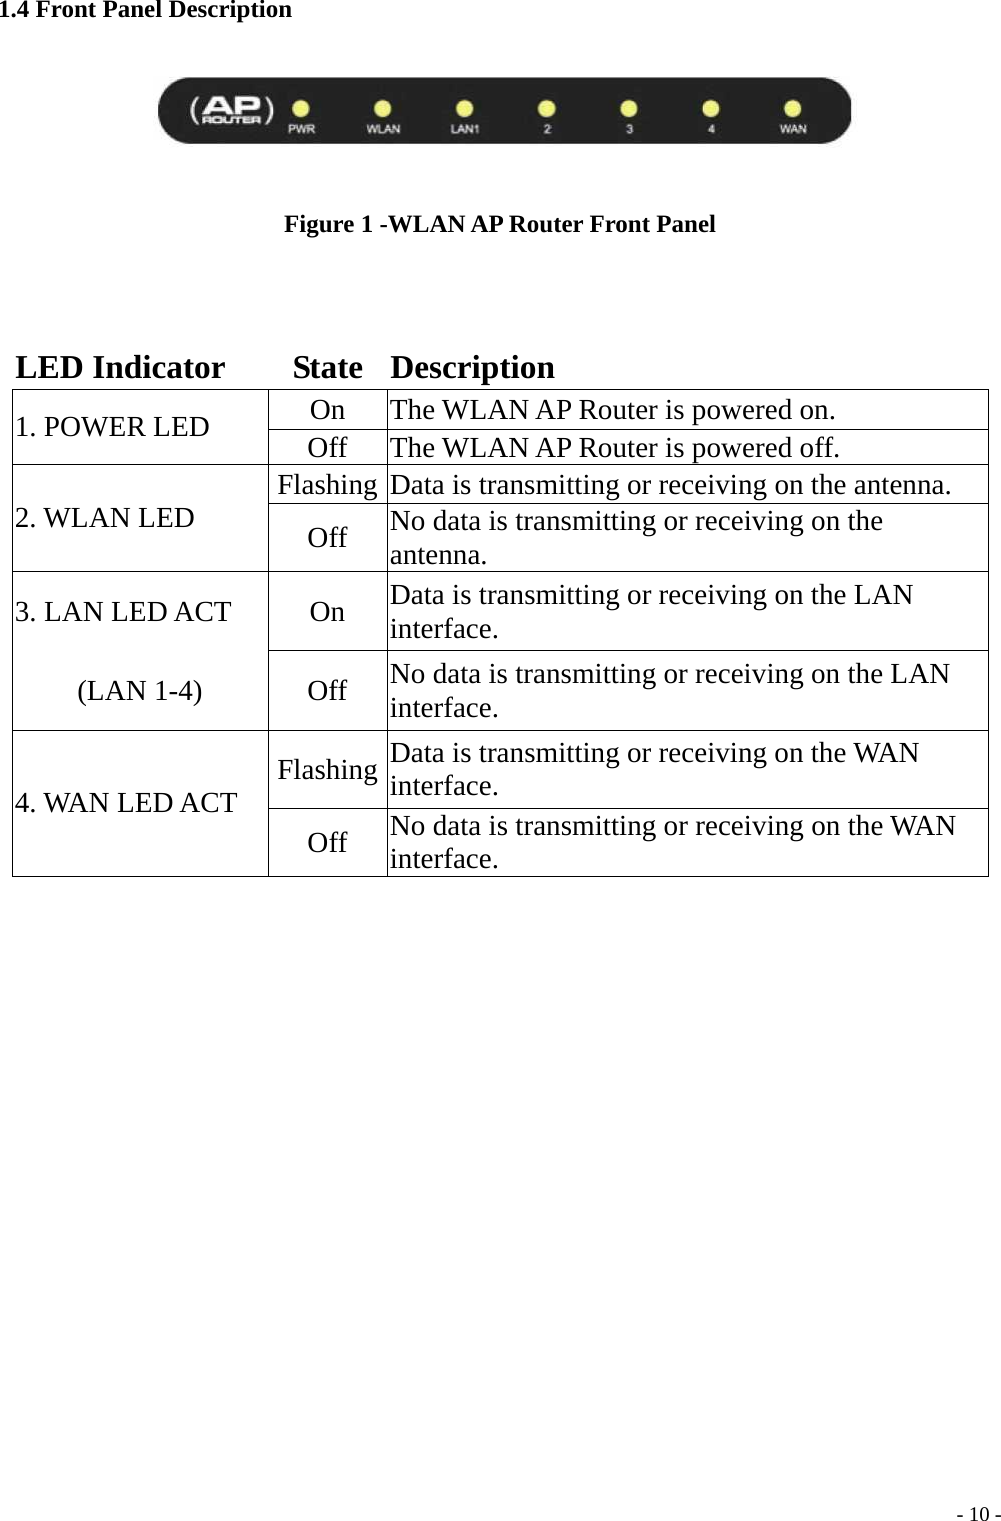 1.4 Front Panel Description  Figure 1 -WLAN AP Router Front Panel   LED Indicator  State  Description On  The WLAN AP Router is powered on. 1. POWER LED  Off  The WLAN AP Router is powered off. Flashing  Data is transmitting or receiving on the antenna. 2. WLAN LED  Off   No data is transmitting or receiving on the antenna. 3. LAN LED ACT  On  Data is transmitting or receiving on the LAN interface. (LAN 1-4)  Off    No data is transmitting or receiving on the LAN interface. Flashing Data is transmitting or receiving on the WAN interface. 4. WAN LED ACT Off   No data is transmitting or receiving on the WAN interface.   - 10 -